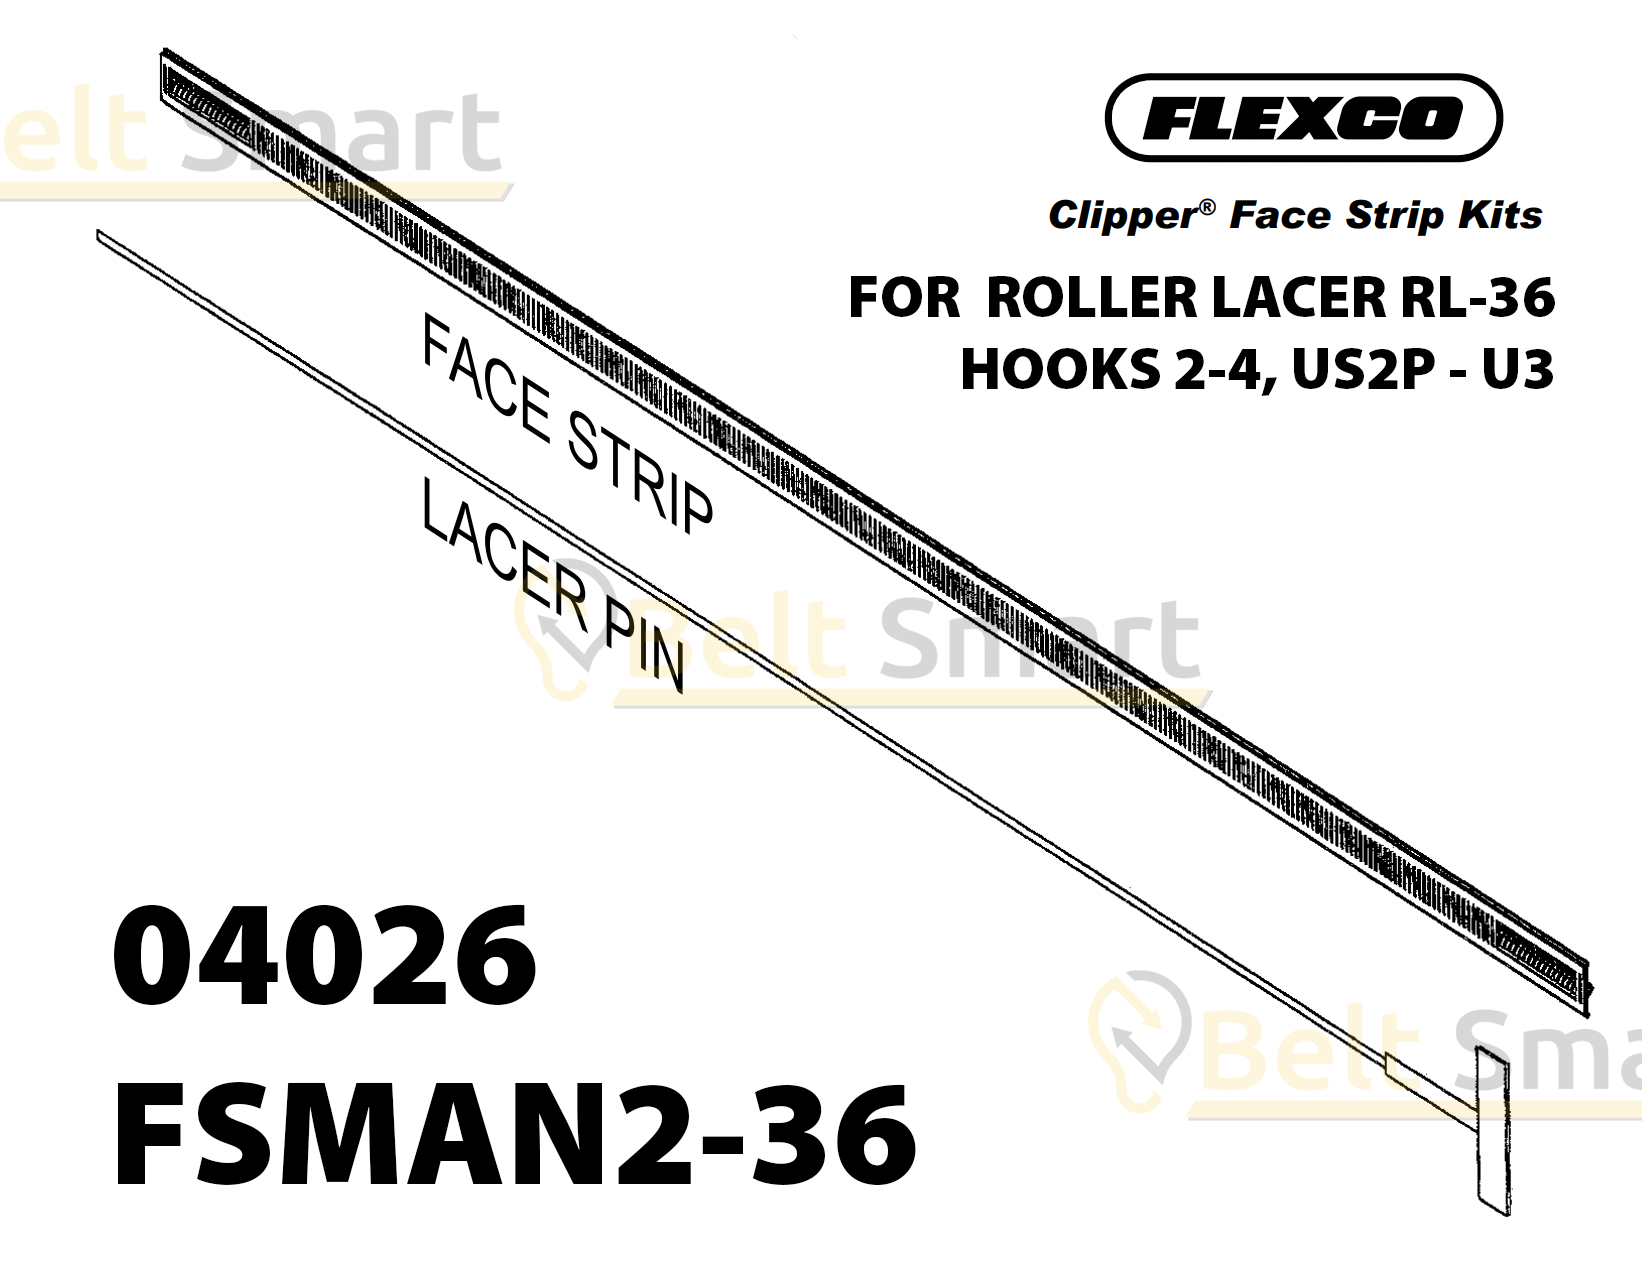 FSMAN2-36 Flexco Clipper Manual Roller Lacer Face Strip - 04026 - 36